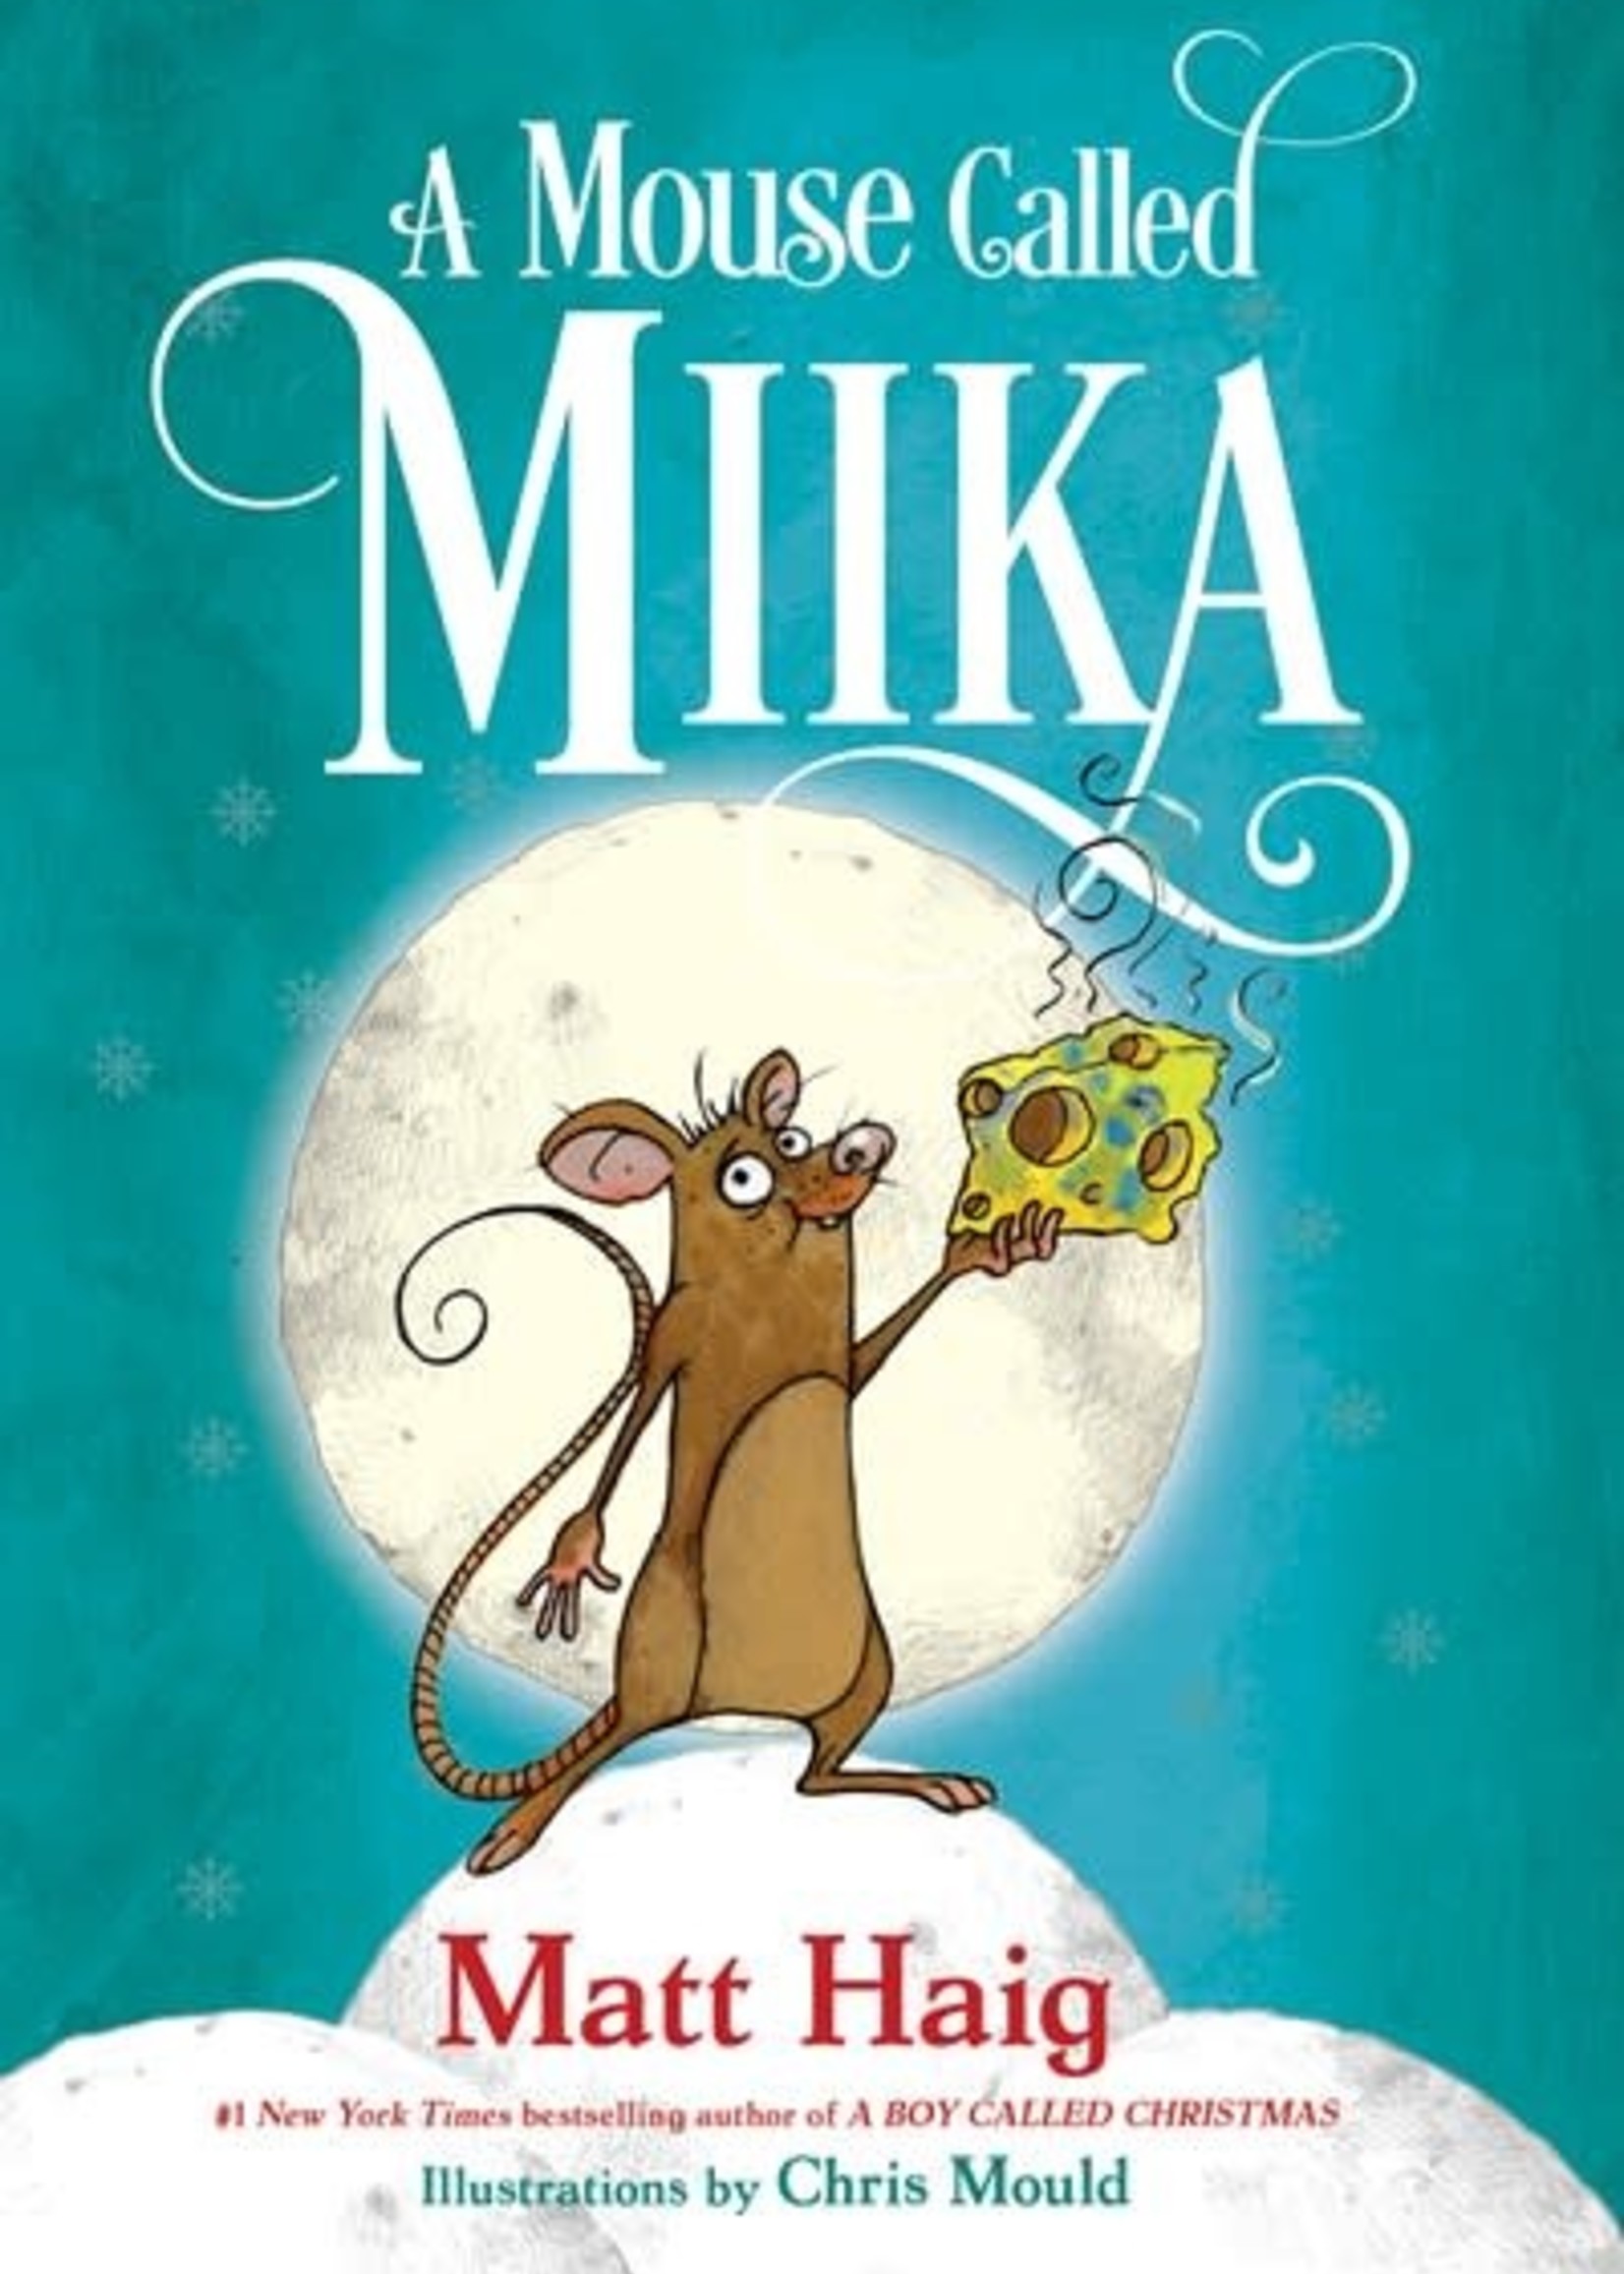 Mouse Called Miika